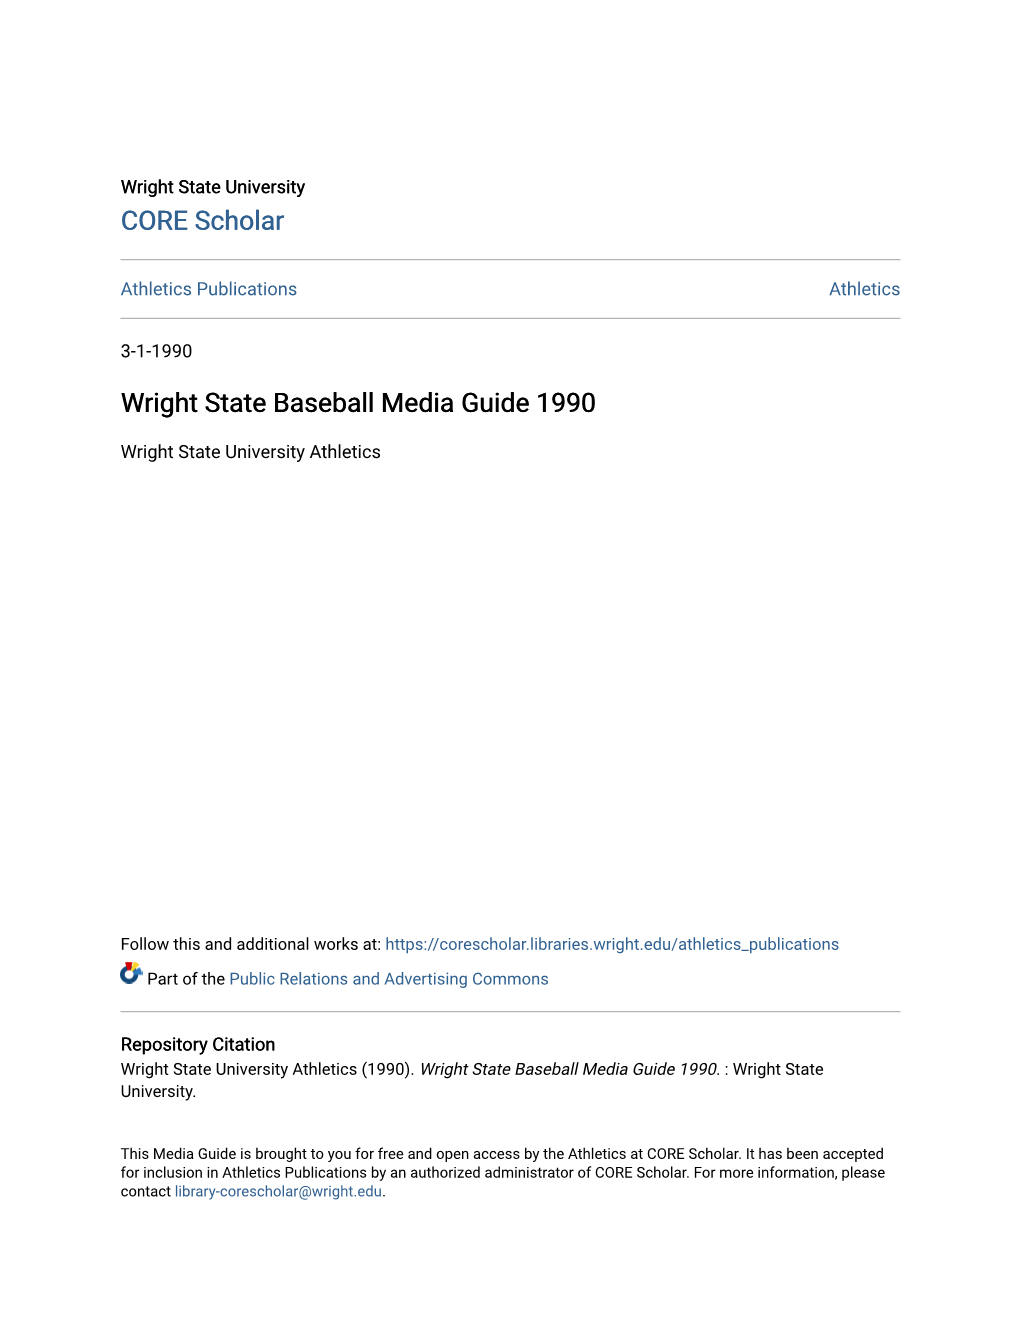 Wright State Baseball Media Guide 1990